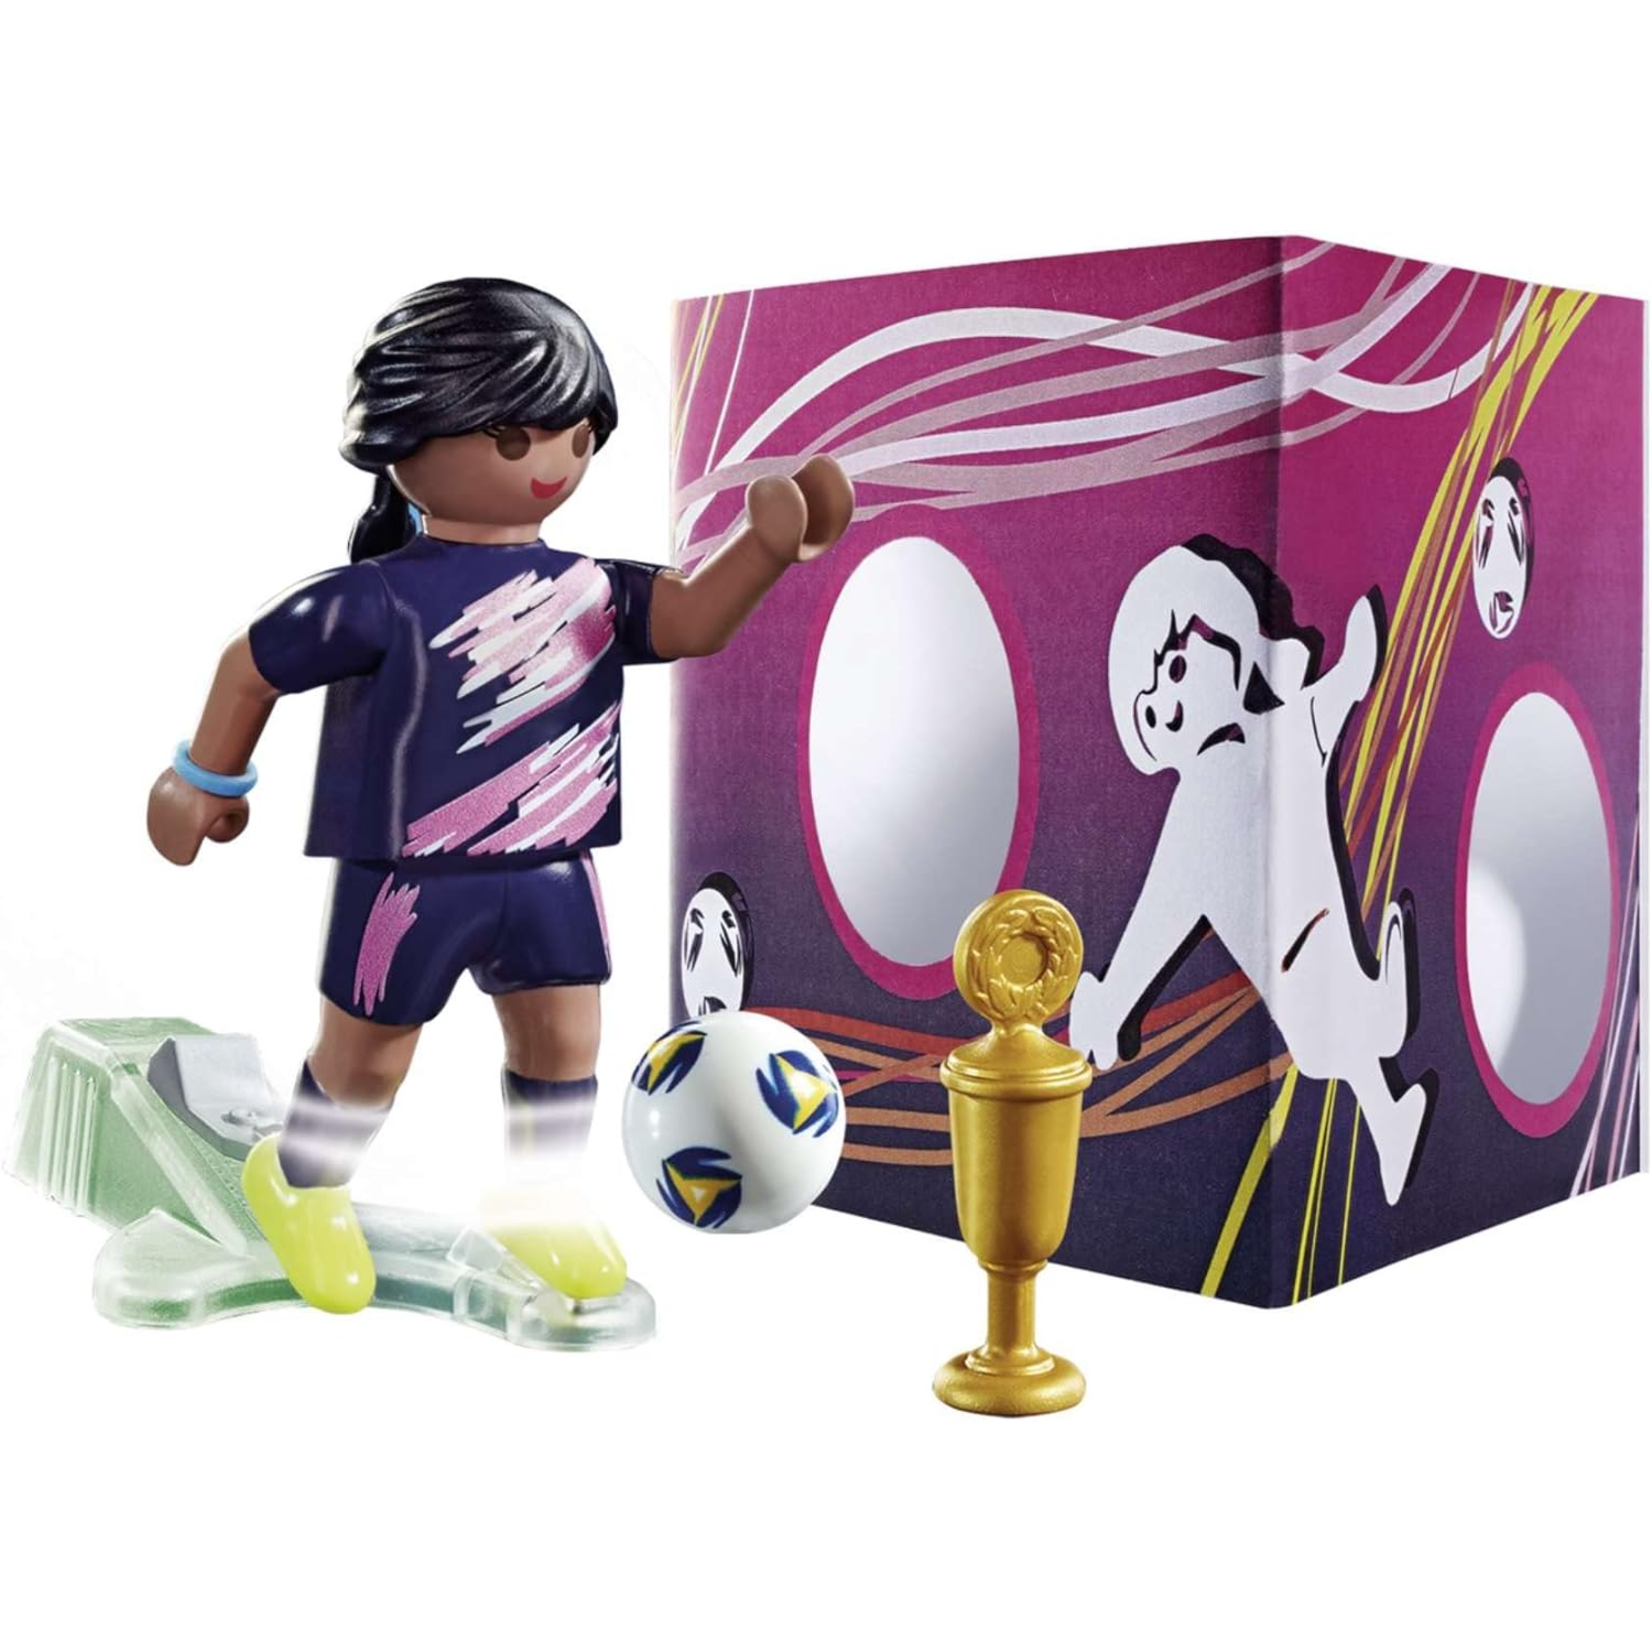 Playmobil Soccer Player with Goal - Playmobil 70875